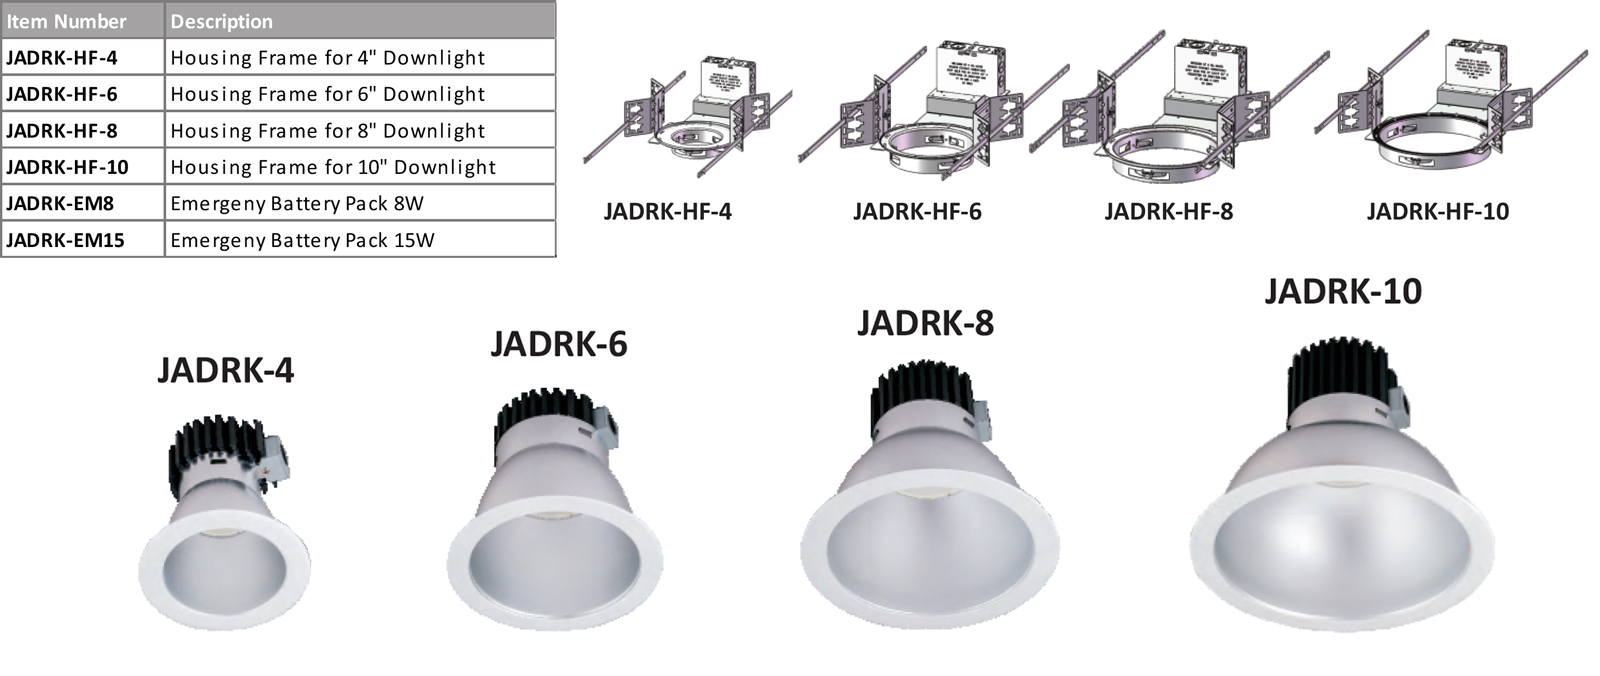 JADRK Architectural LED Retrofit Downlight Series